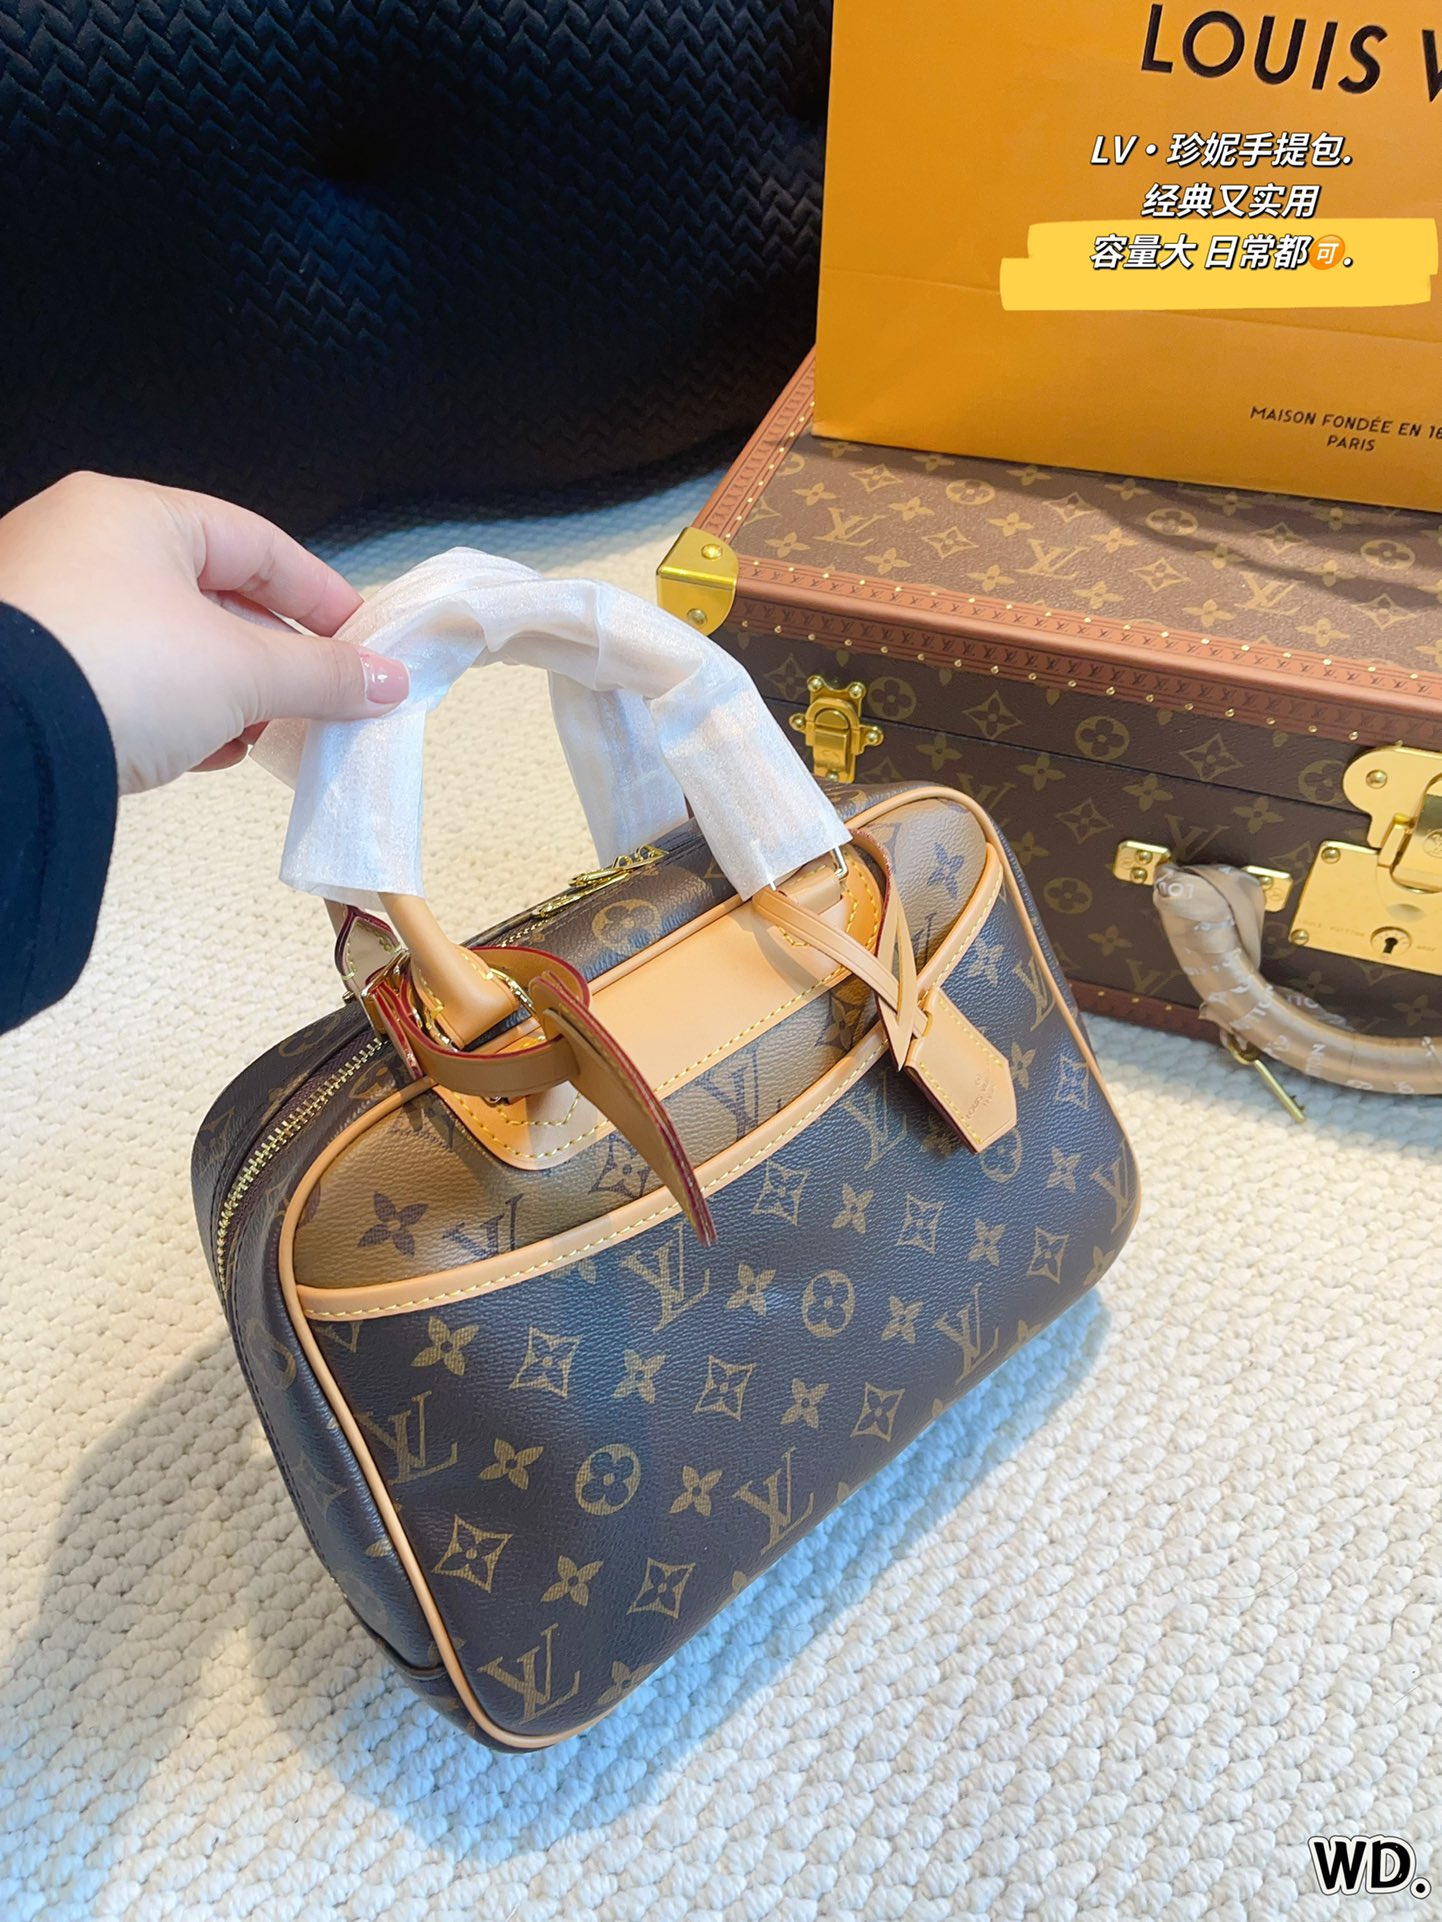 Louis new arrival Jenny handbag size: 27*11*19cm